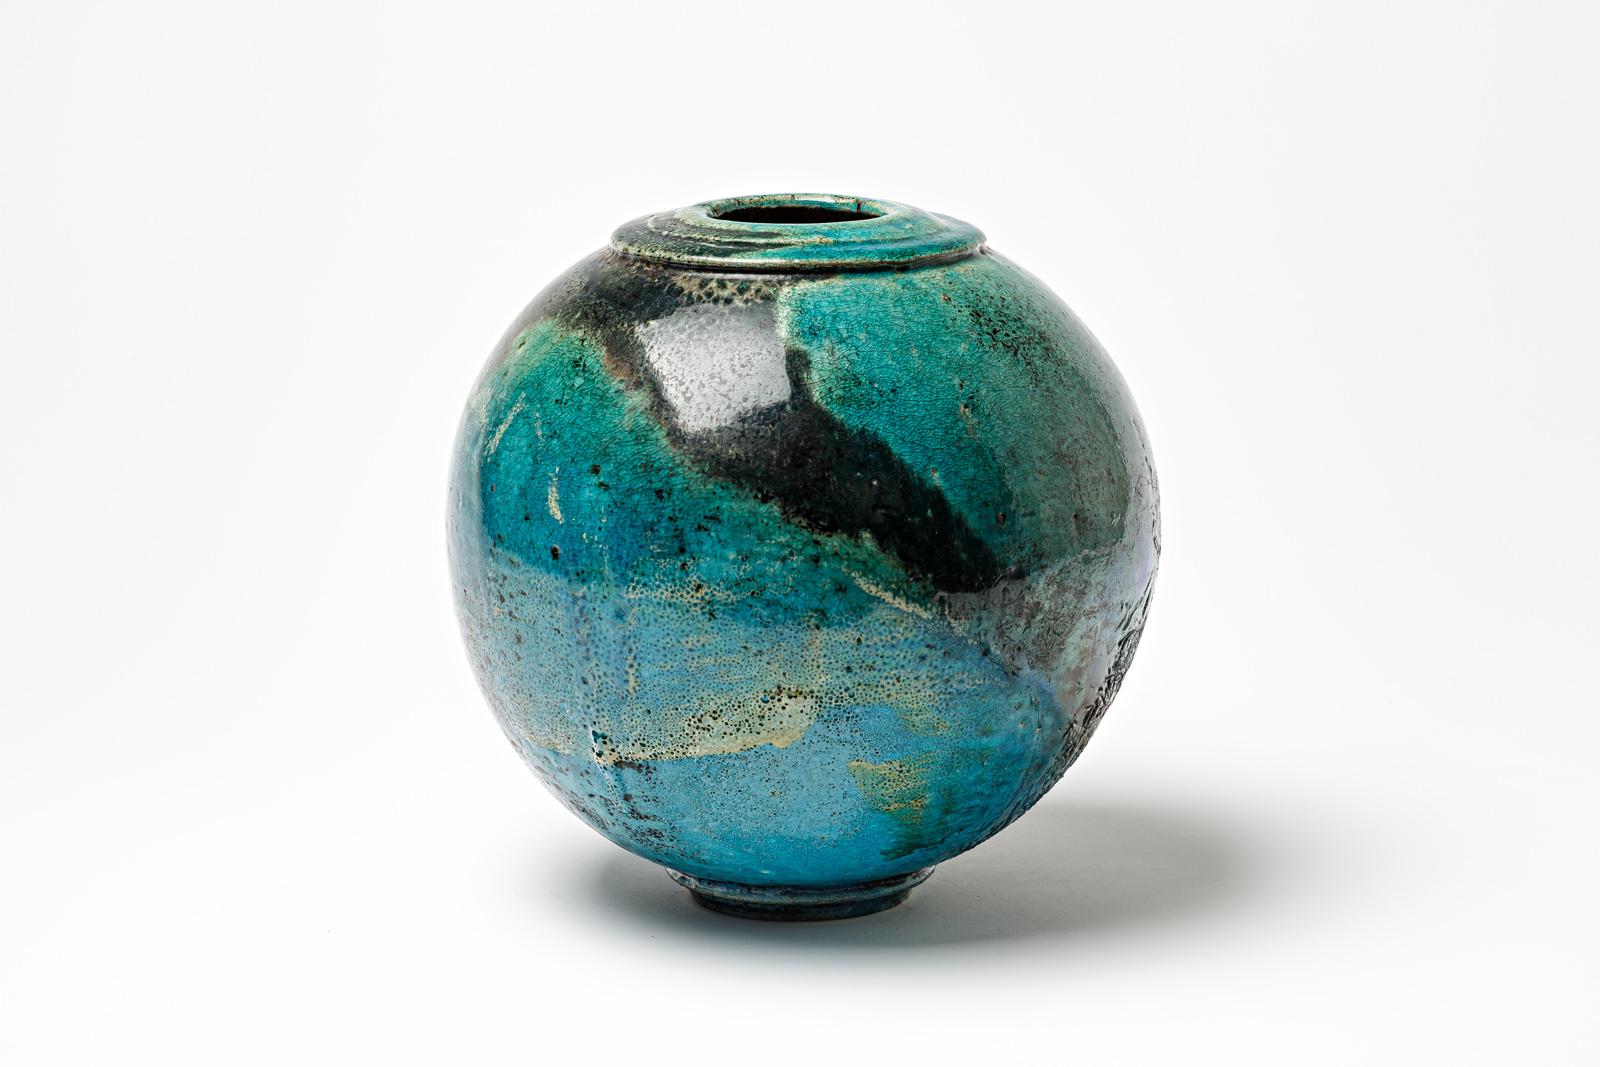 Blue/green and black glazed ceramic ball vase by Gisèle Buthod Garçon. 
Raku fired. Artist monogram under the base. Vers 1980-1990.
H : 9.8’ x 9.1’ inches.
